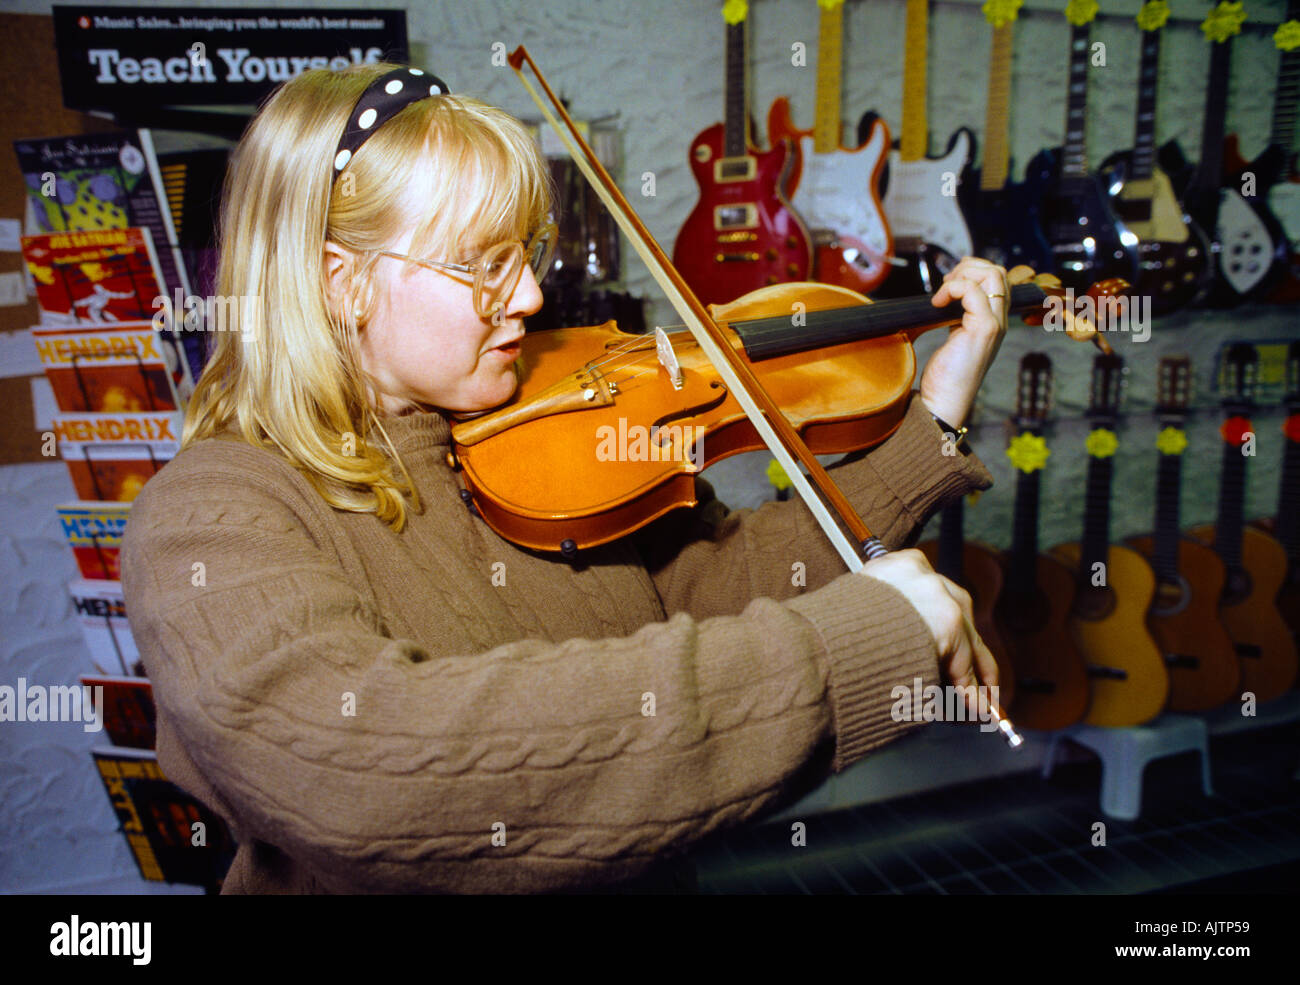 Violin Music Shop Bowing Strings Of Violin Stock Photo